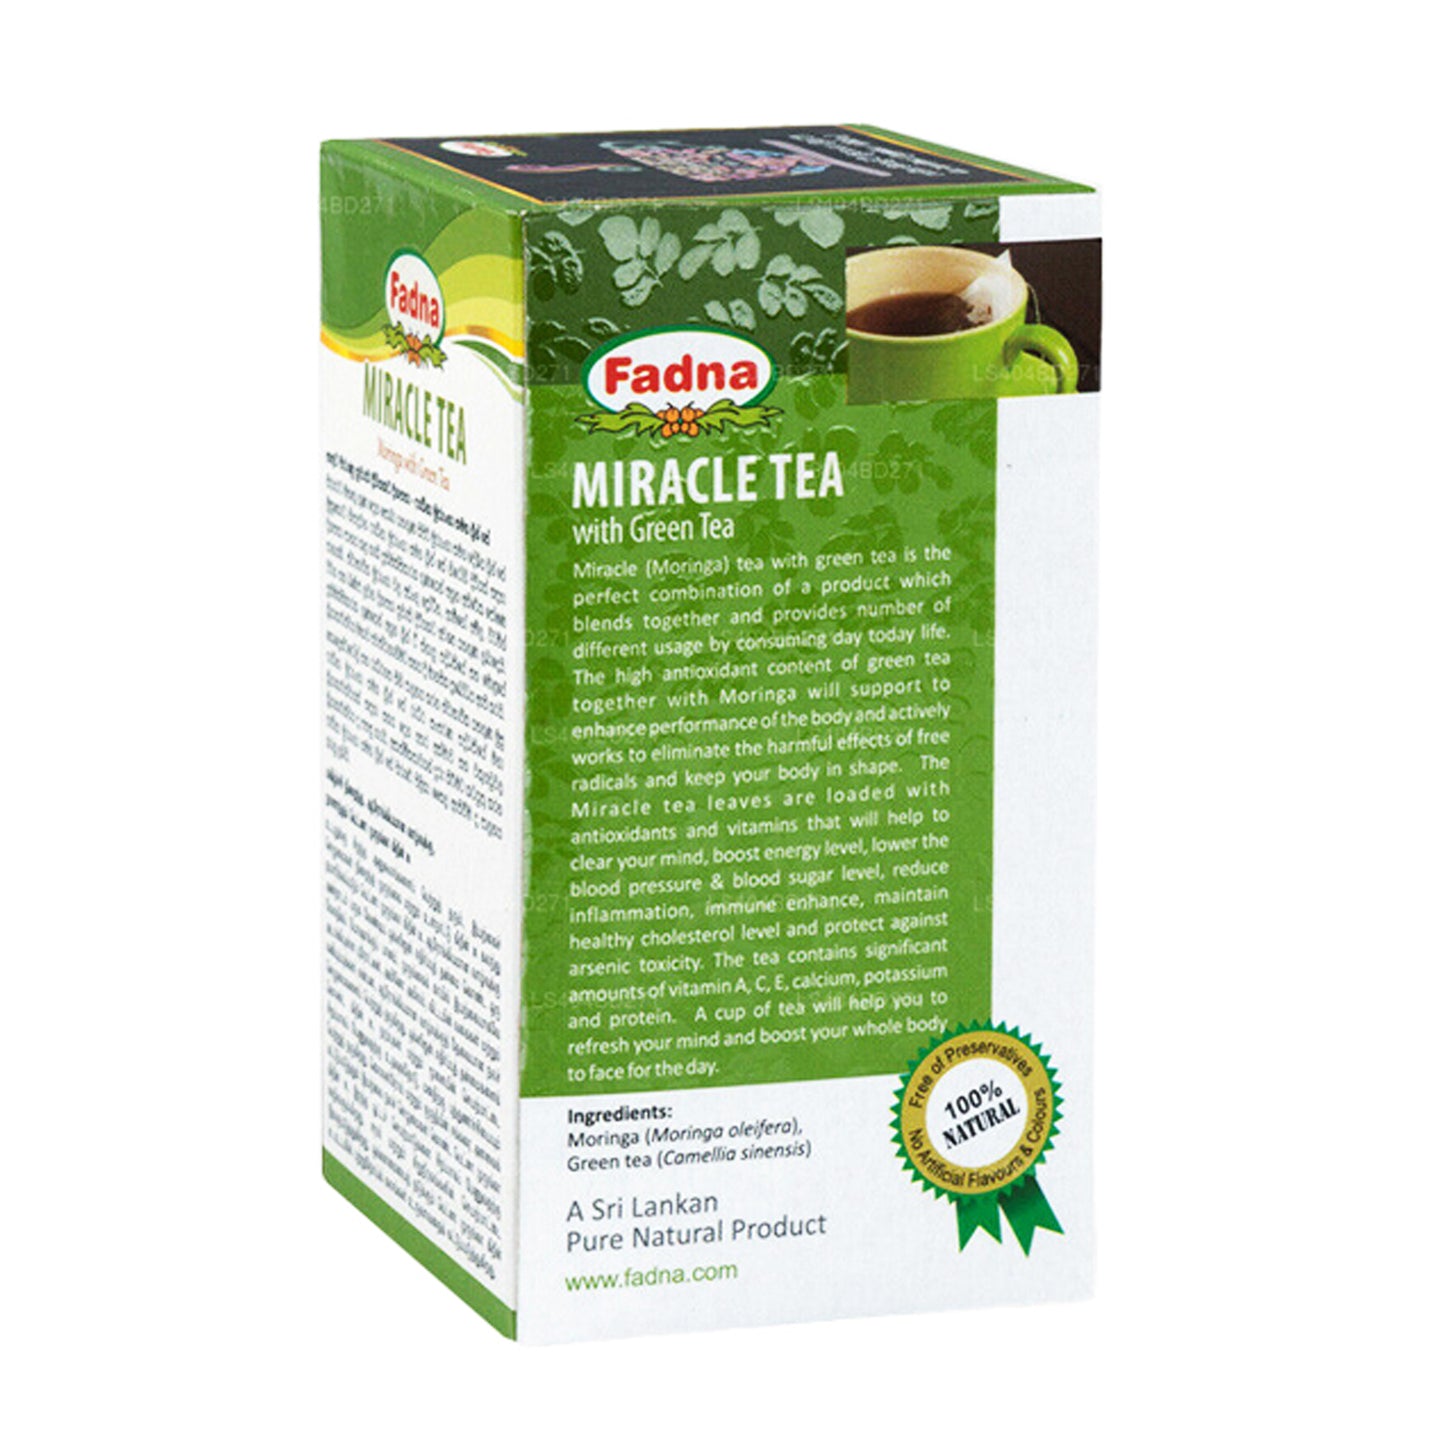 Fadna Miracle Tea Moringa avec thé vert (40 g) 20 sachets de thé